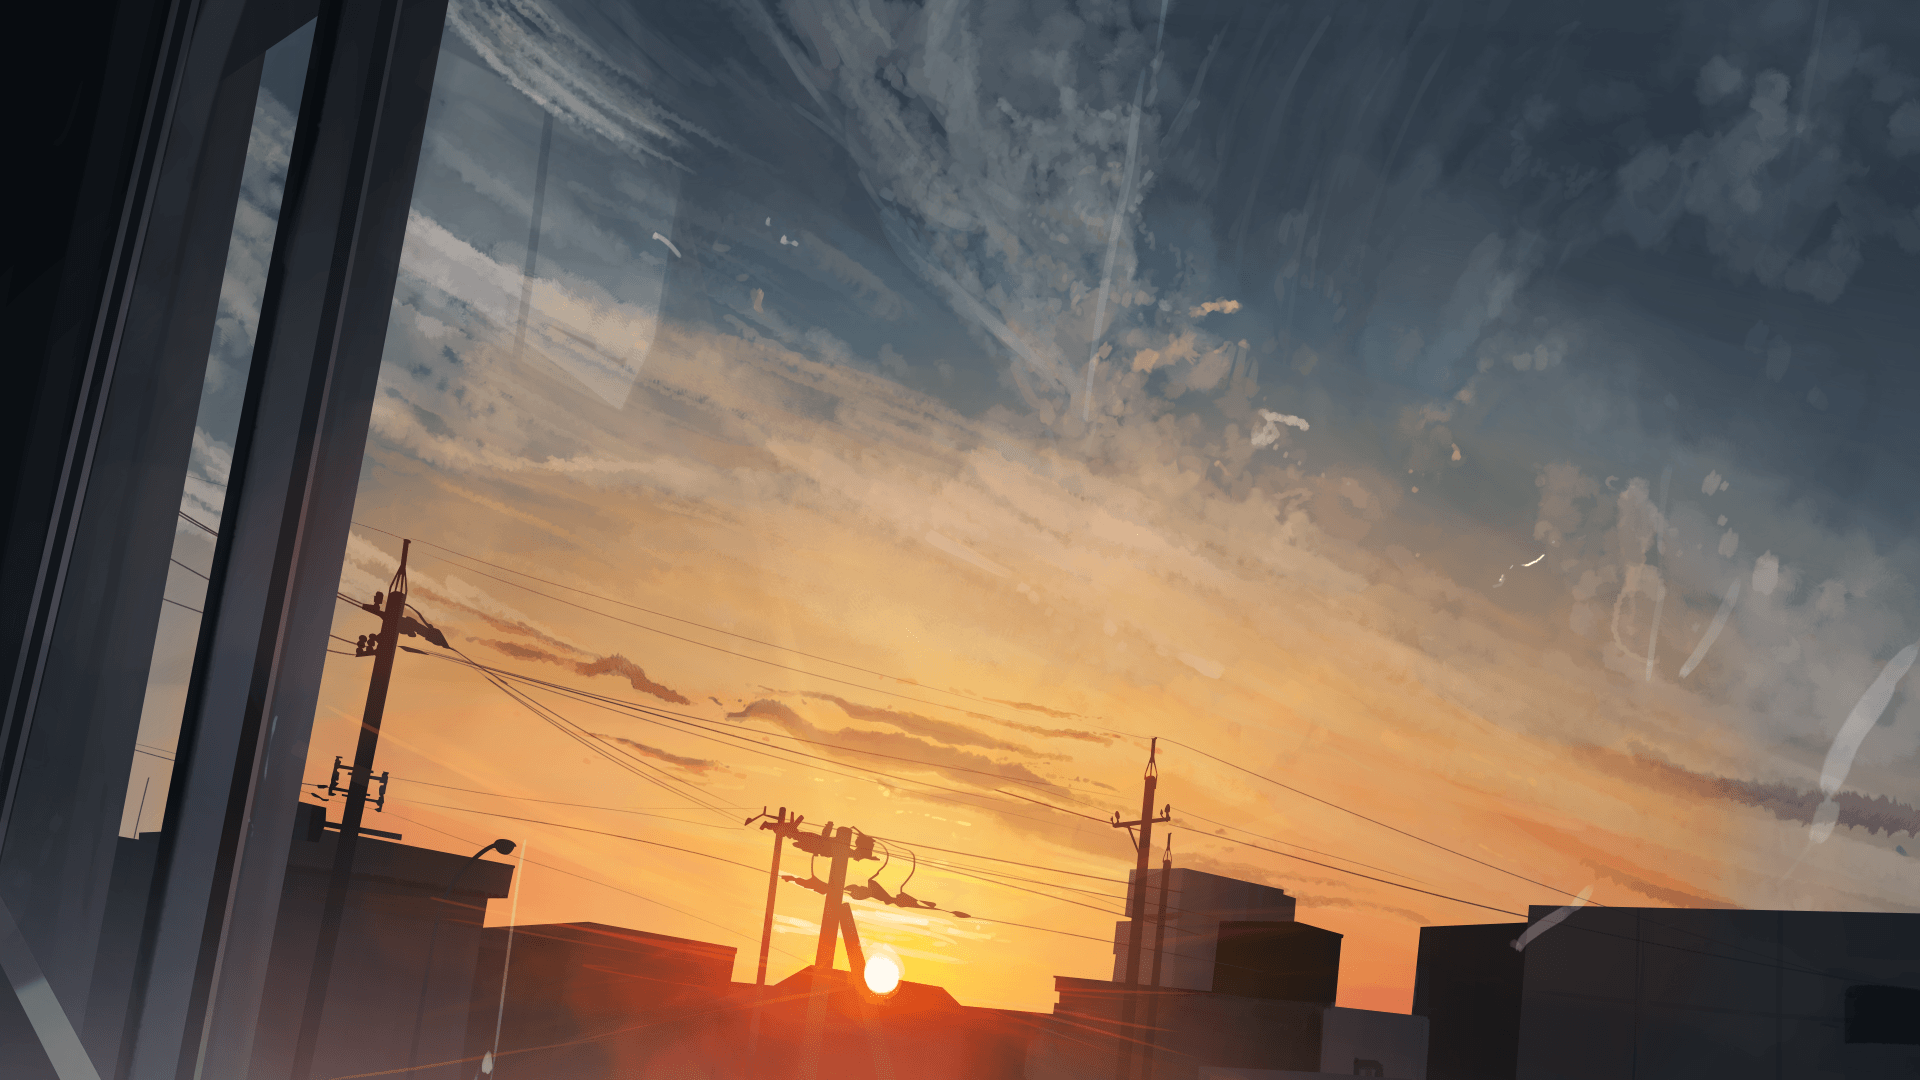 Skyline, fantasy sky, 4K (horizontal). Drawing in 2019